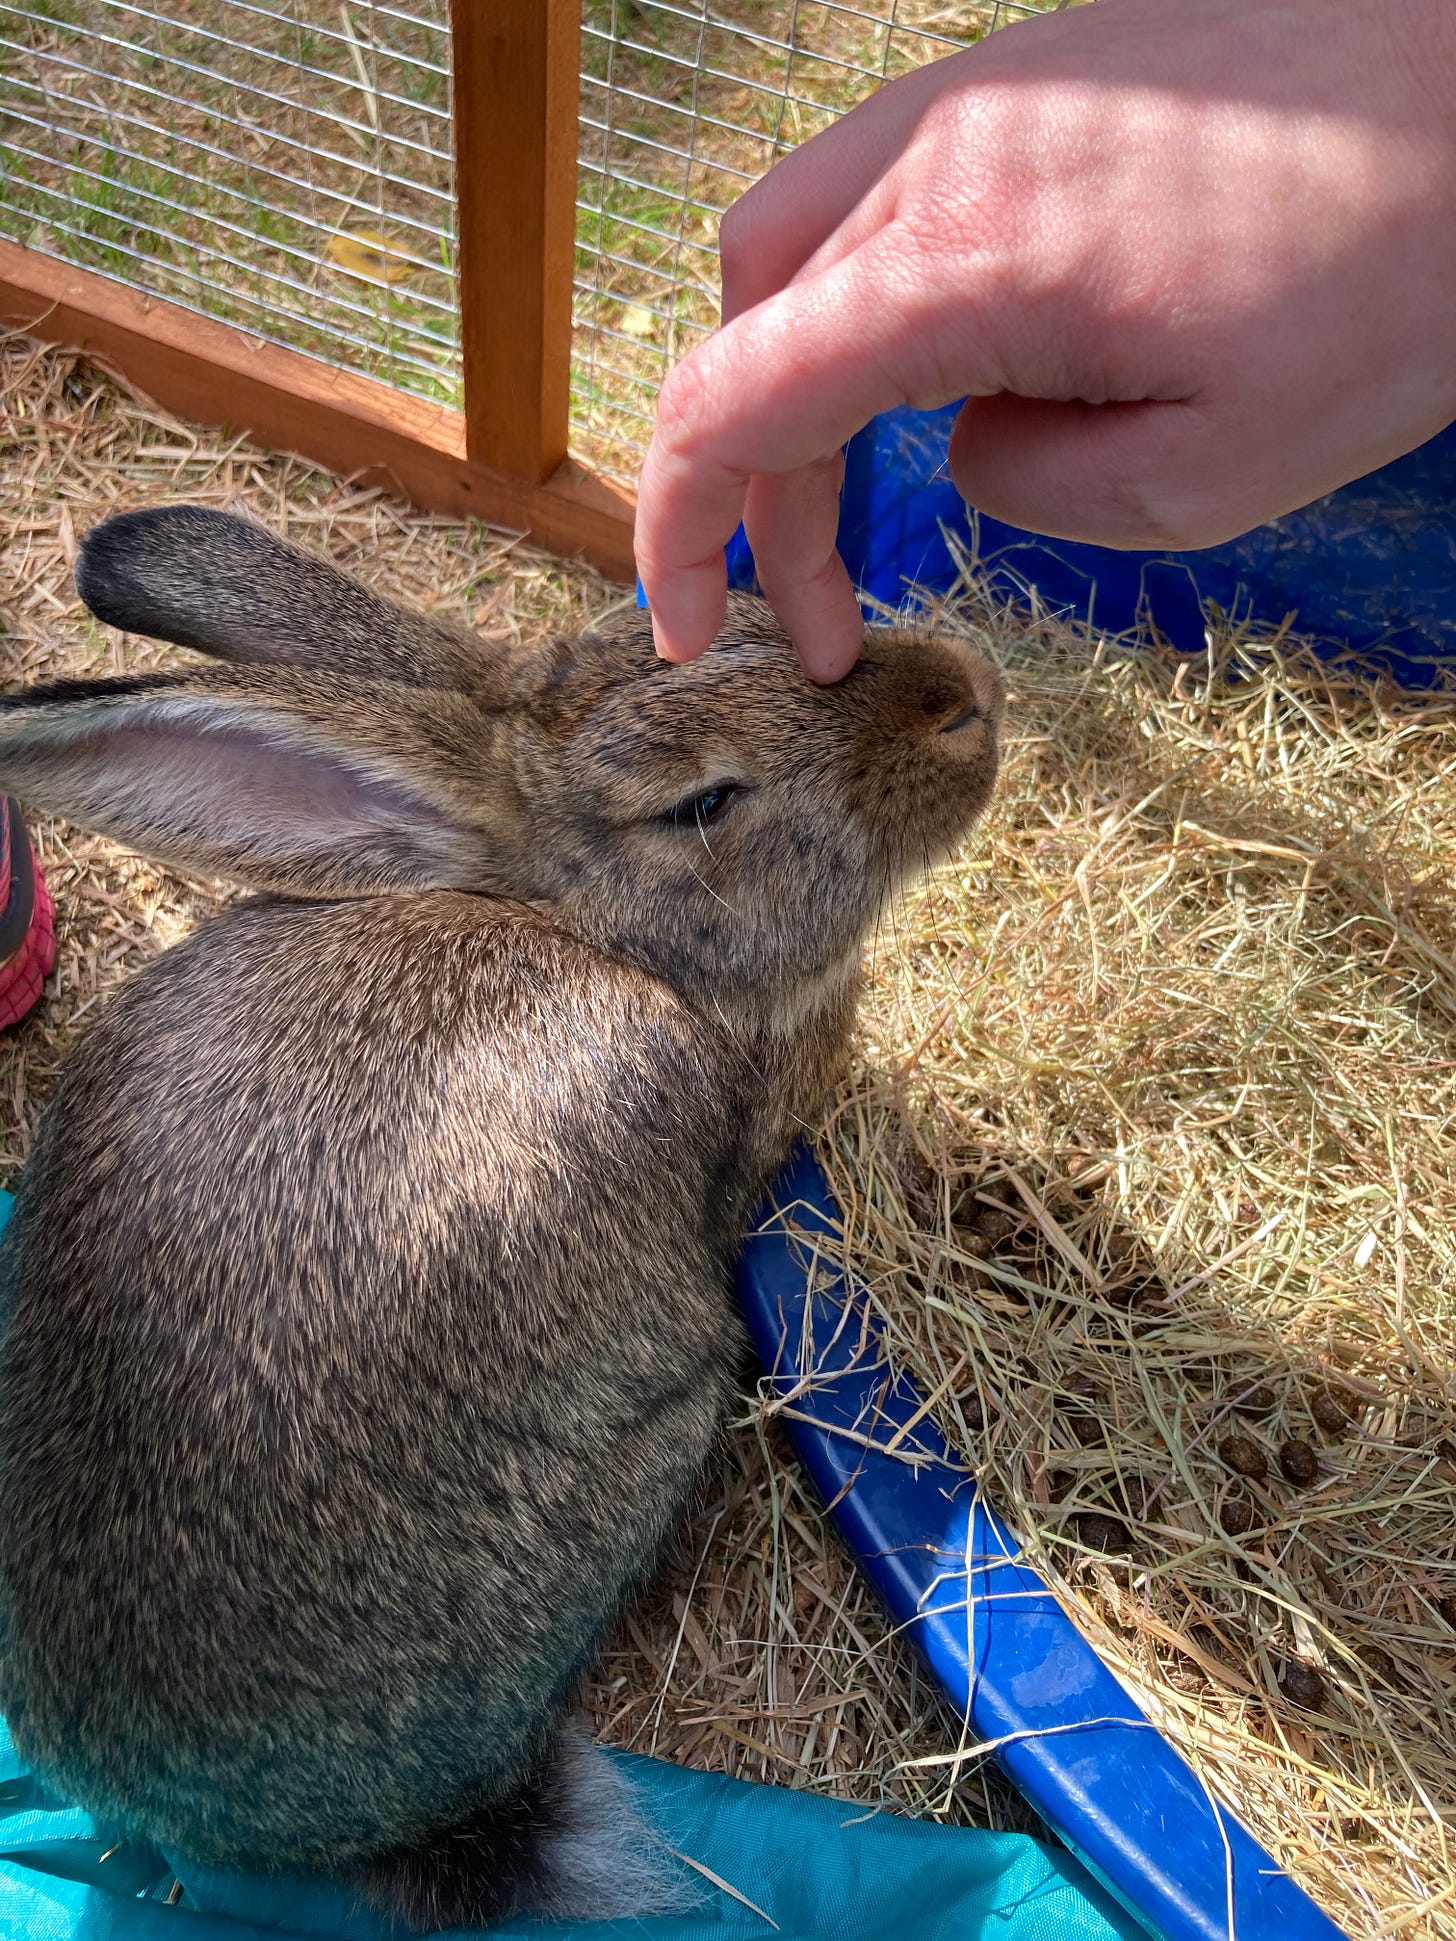 A bunny getting head pets